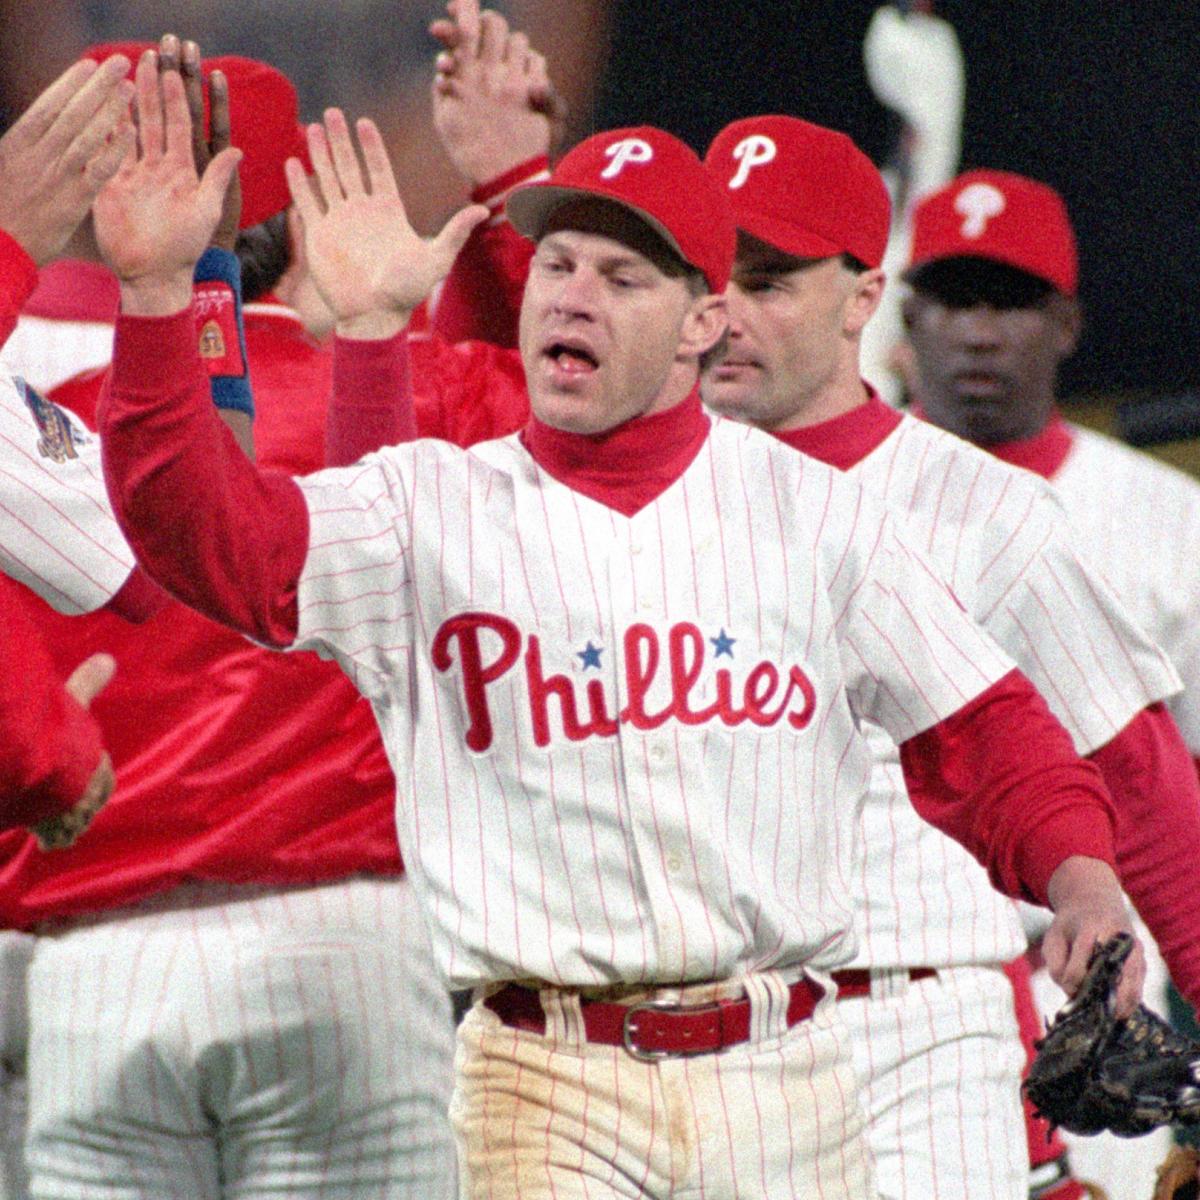 1993 Philadelphia Phillies season - Wikipedia